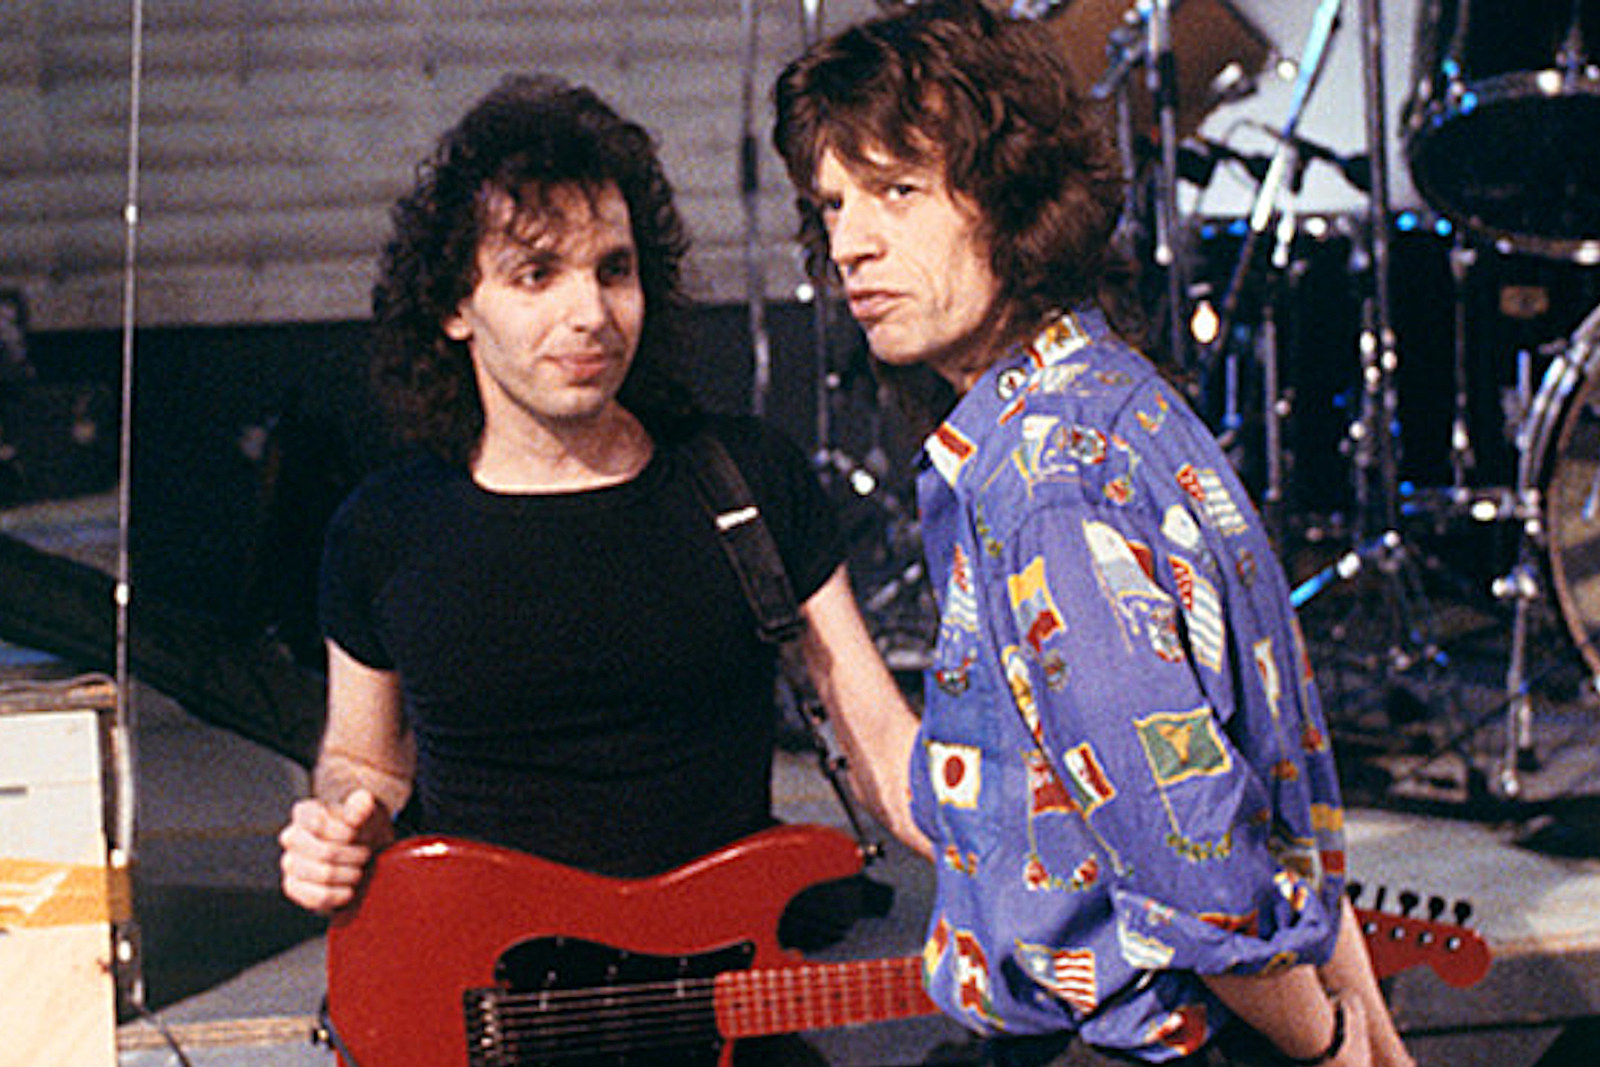 Joe Satriani Recalls ‘Amazing’ Small Bar Gigs With Mick Jagger